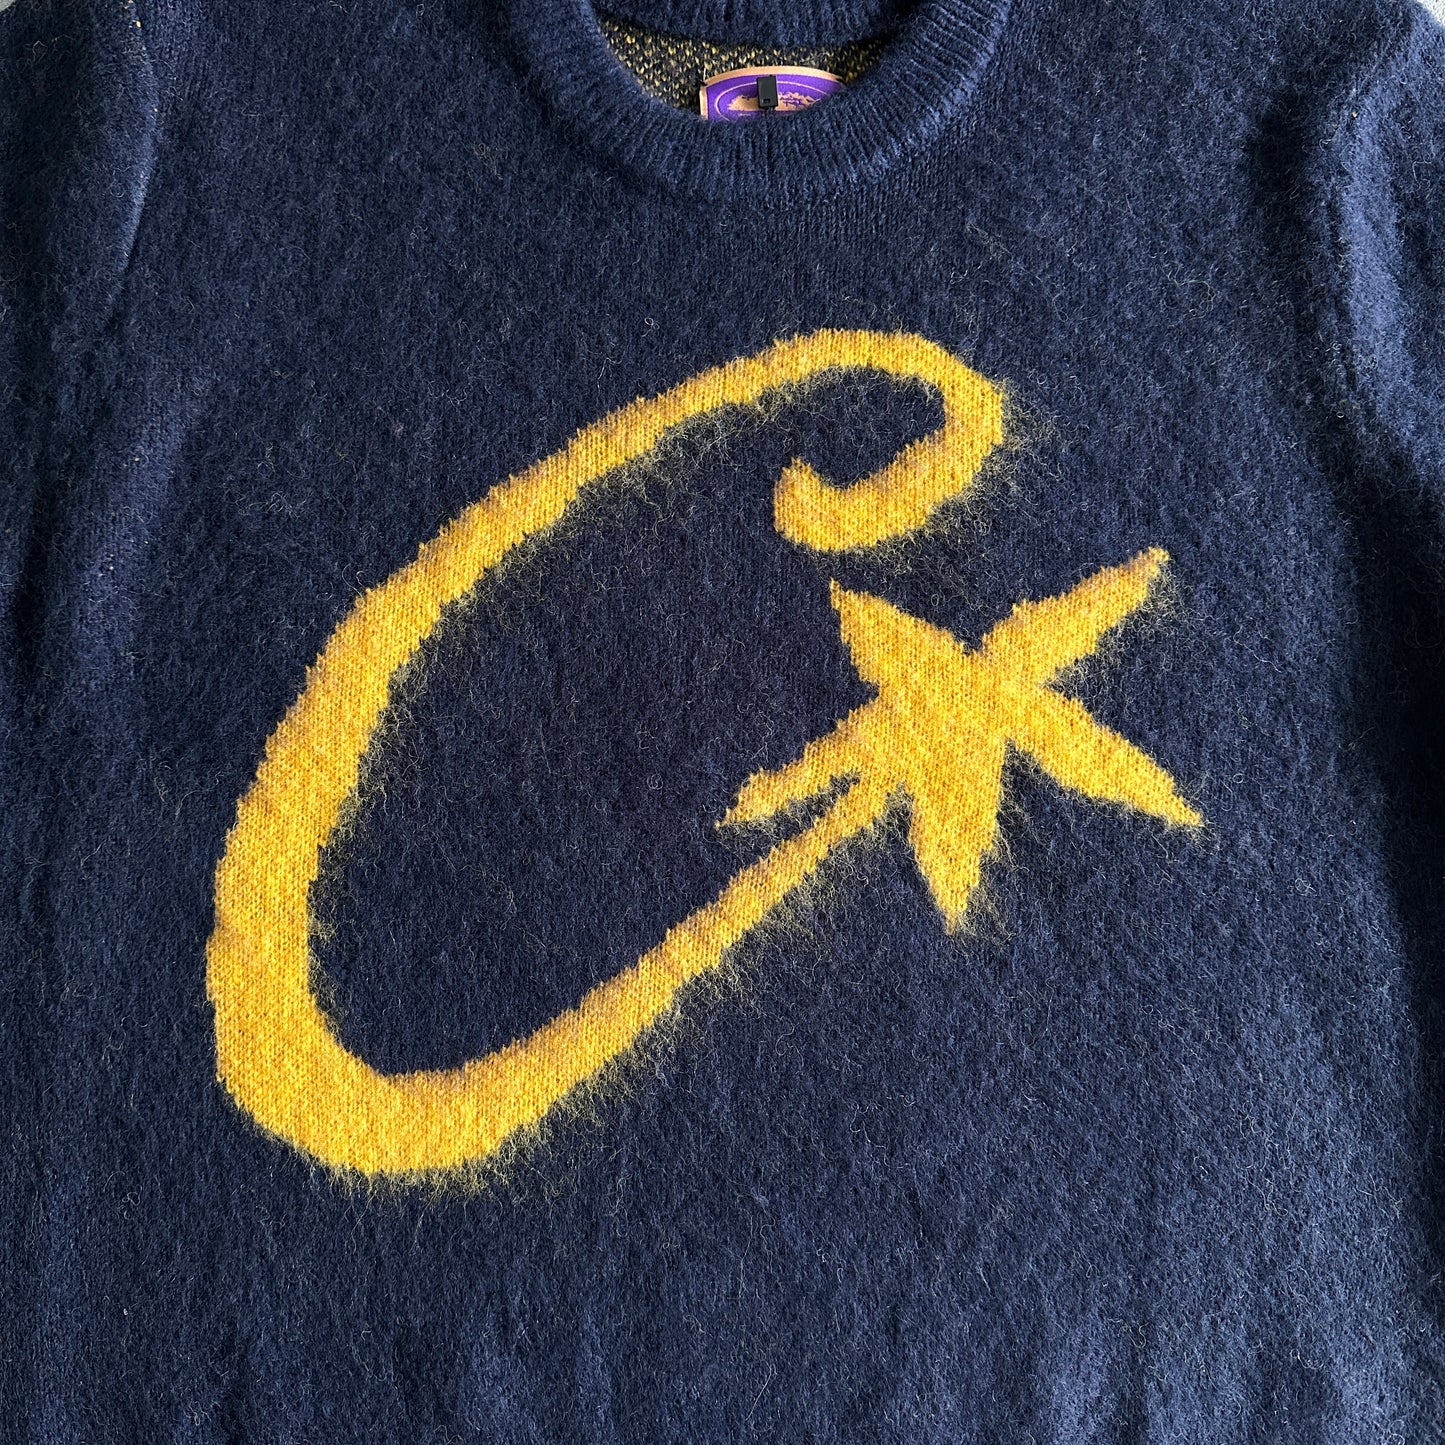 Corteiz C Star Mohairknit Sweater - Navy Blue